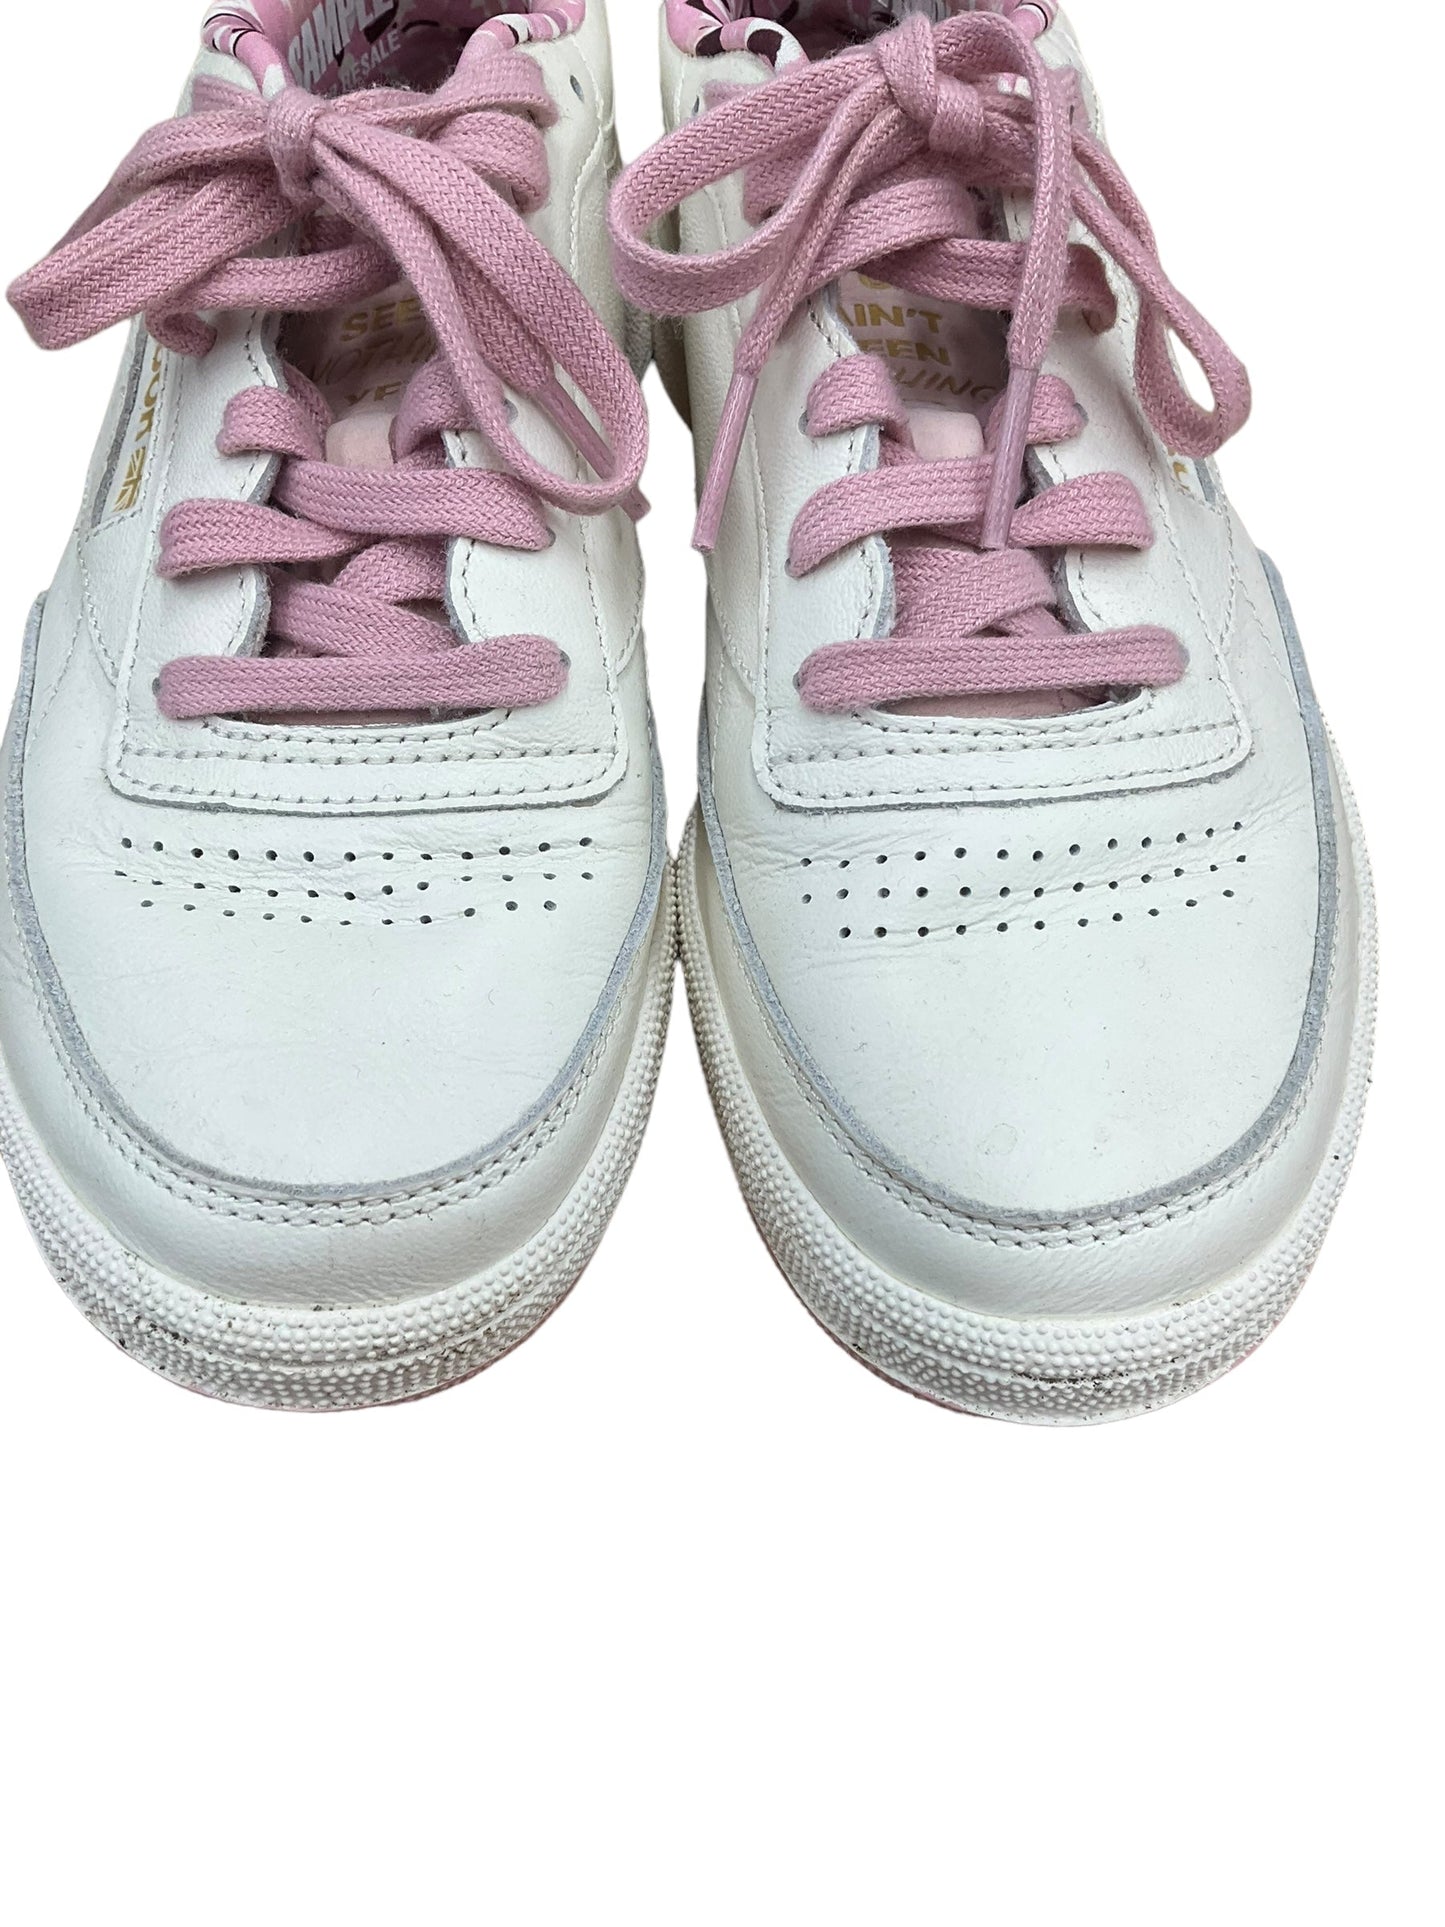 Purple & White Shoes Sneakers Reebok, Size 7